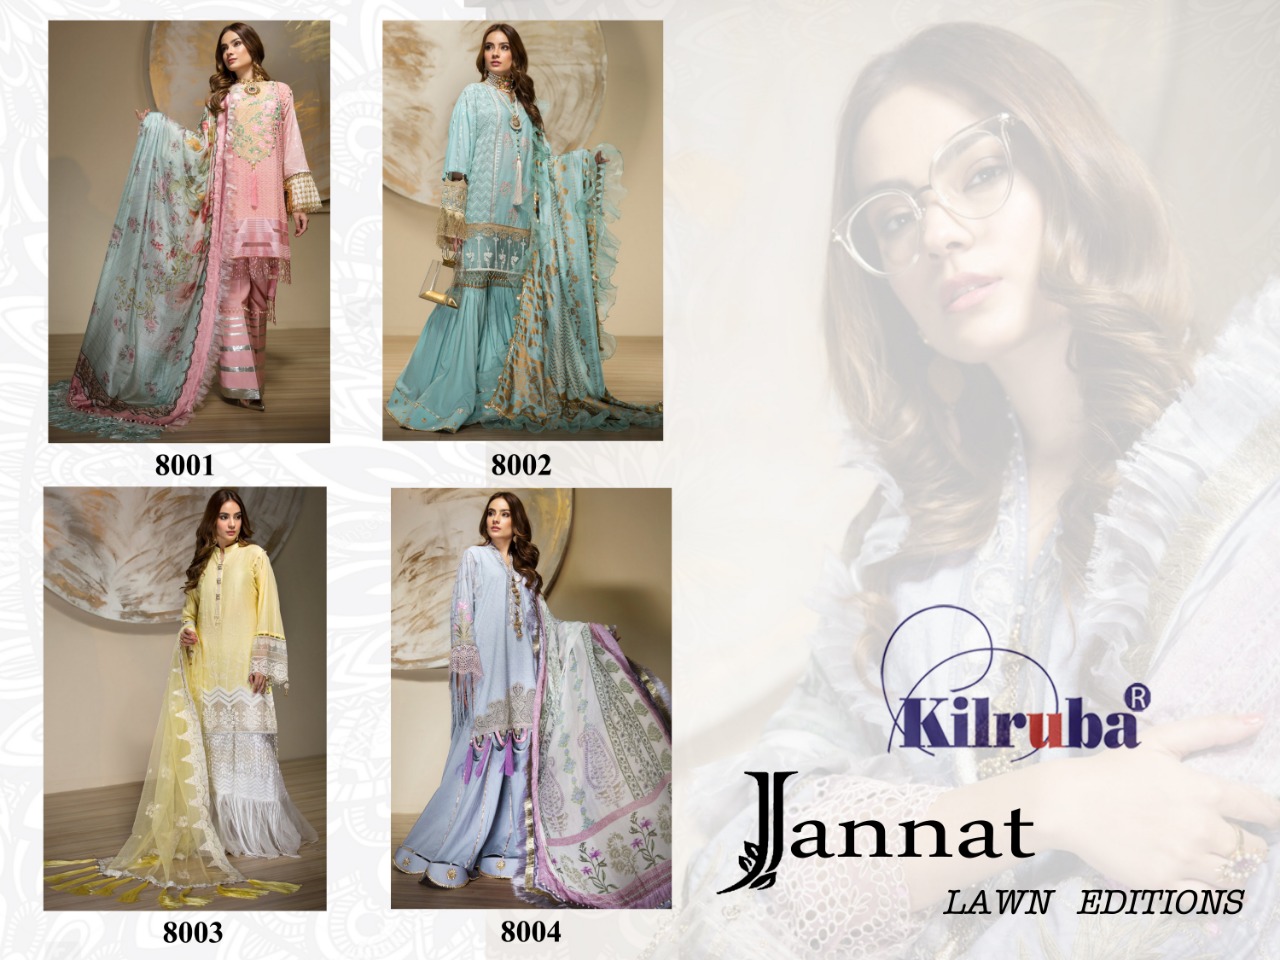 Kilruba Jannat Lawn Editions 8001-8004